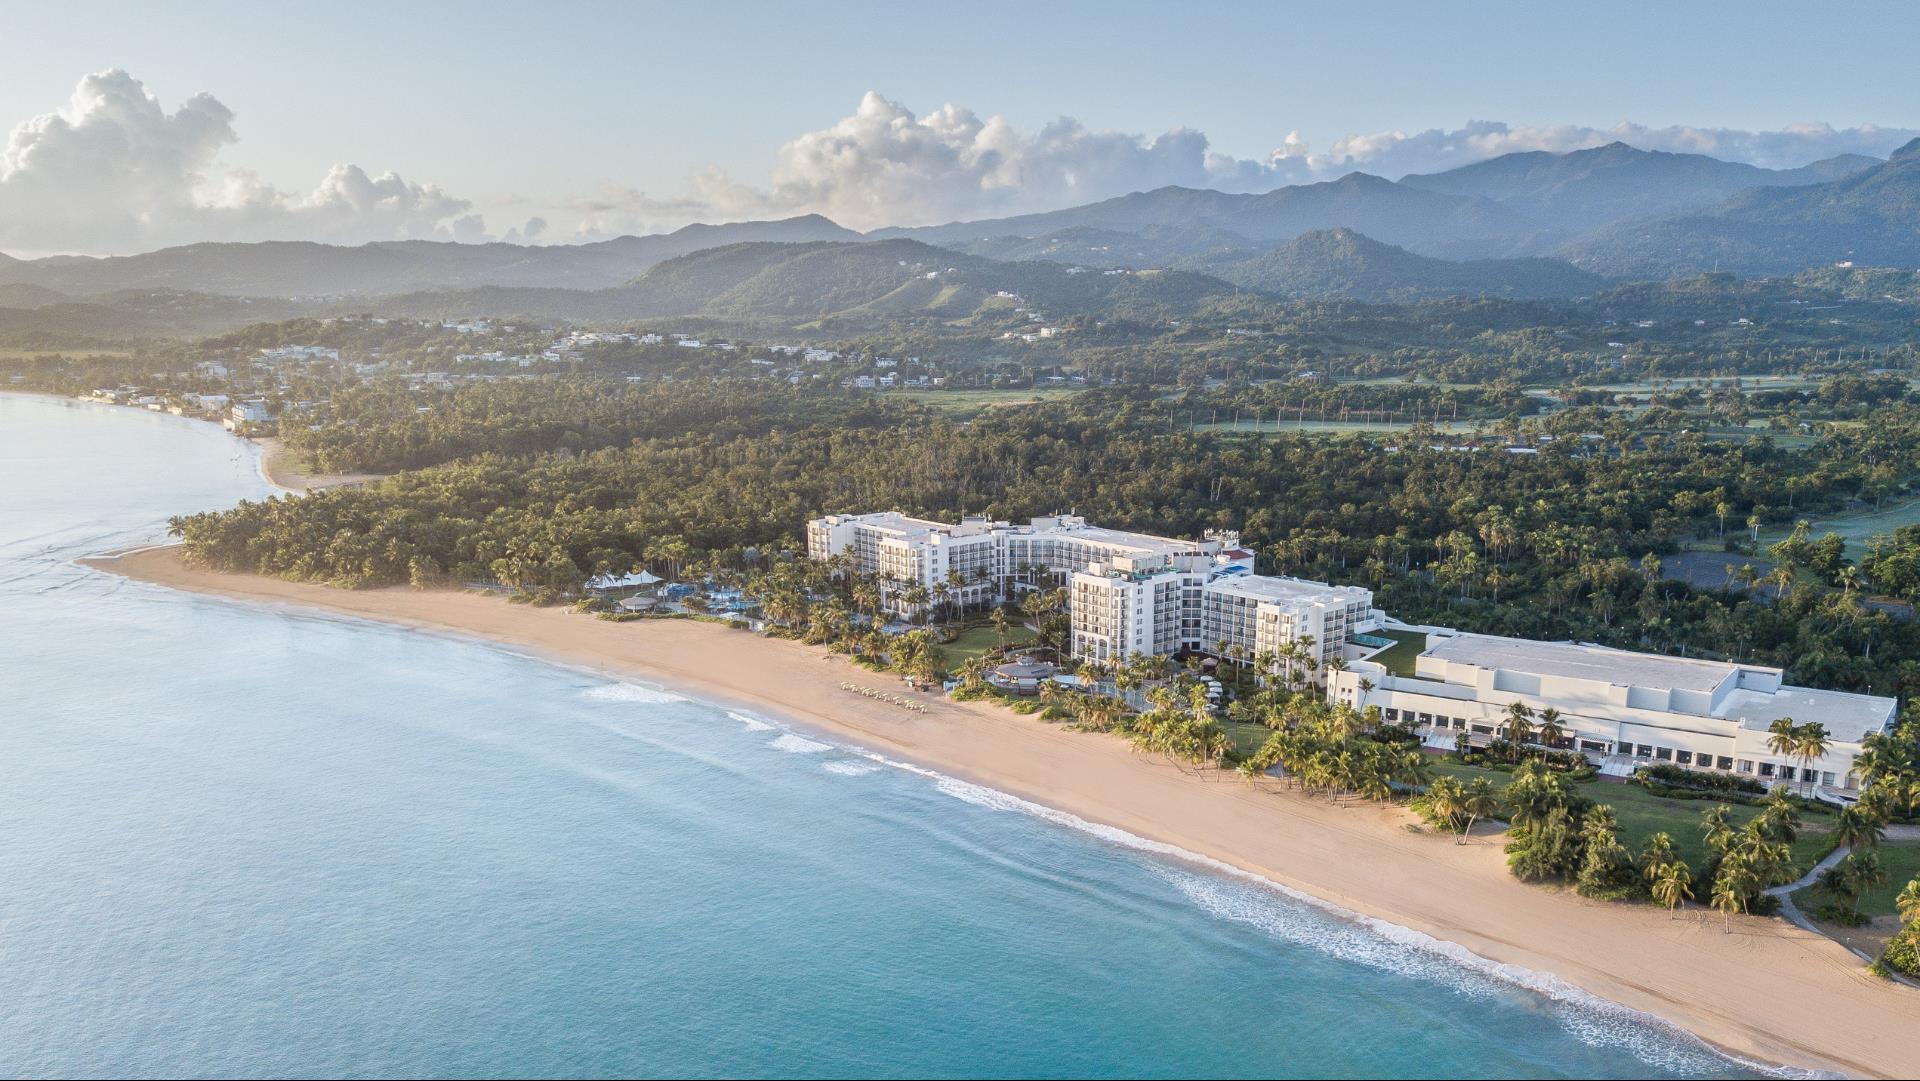 Wyndham Grand Rio Mar Puerto Rico Golf & Beach Resort, a Wyndham Meetings Collection Hotel in Rio Grande, PR